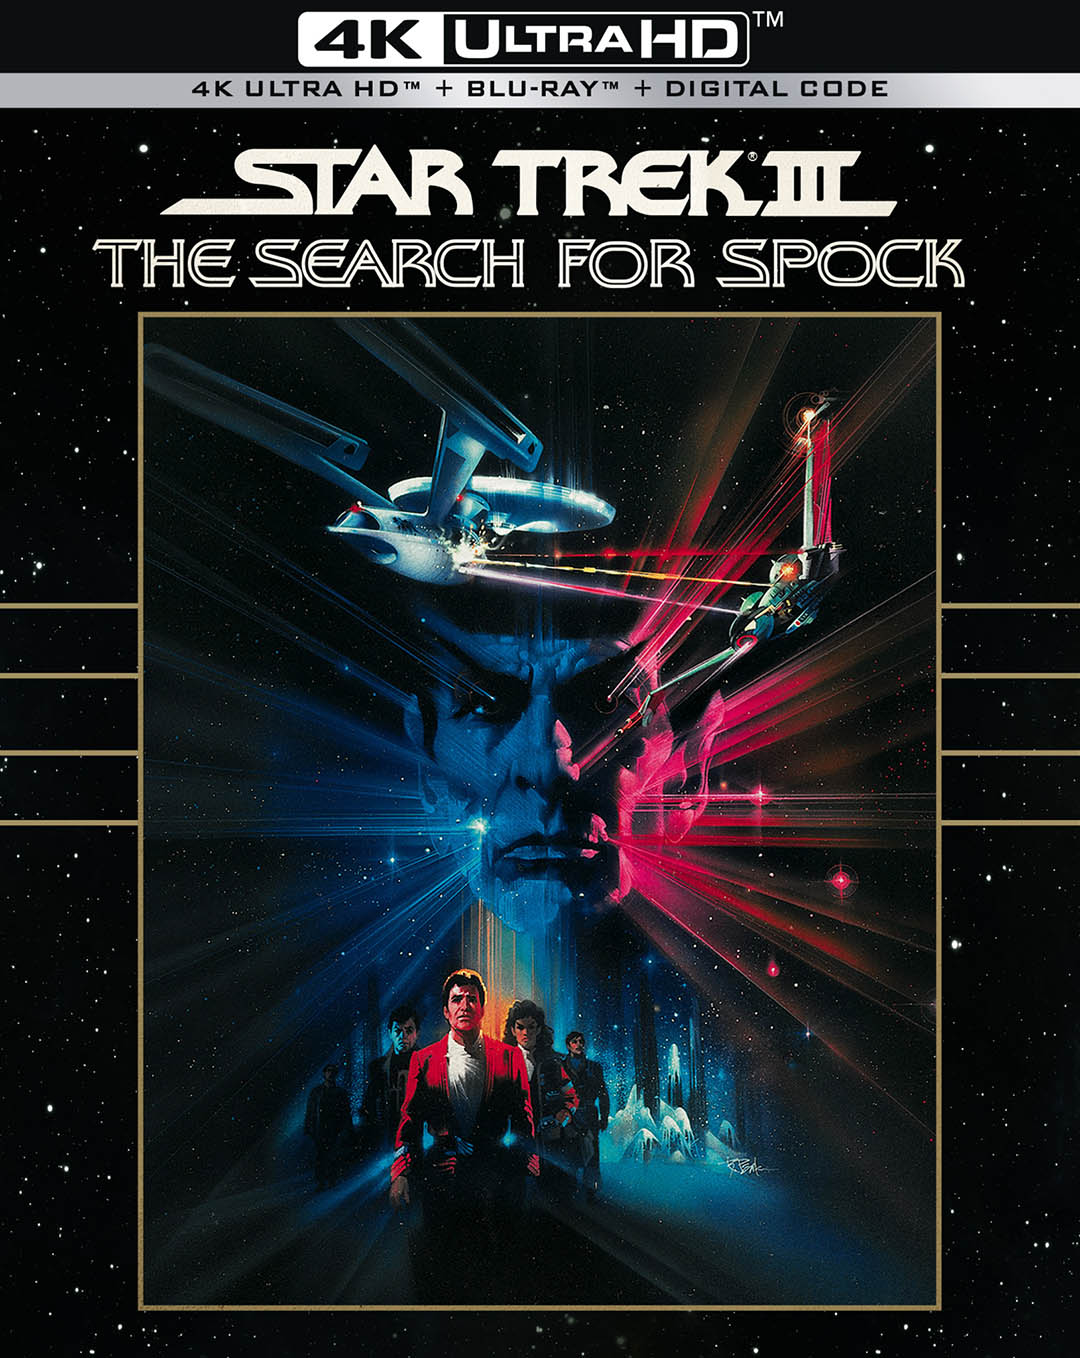 Star Trek III The Search for Spock 4k Blu-ray